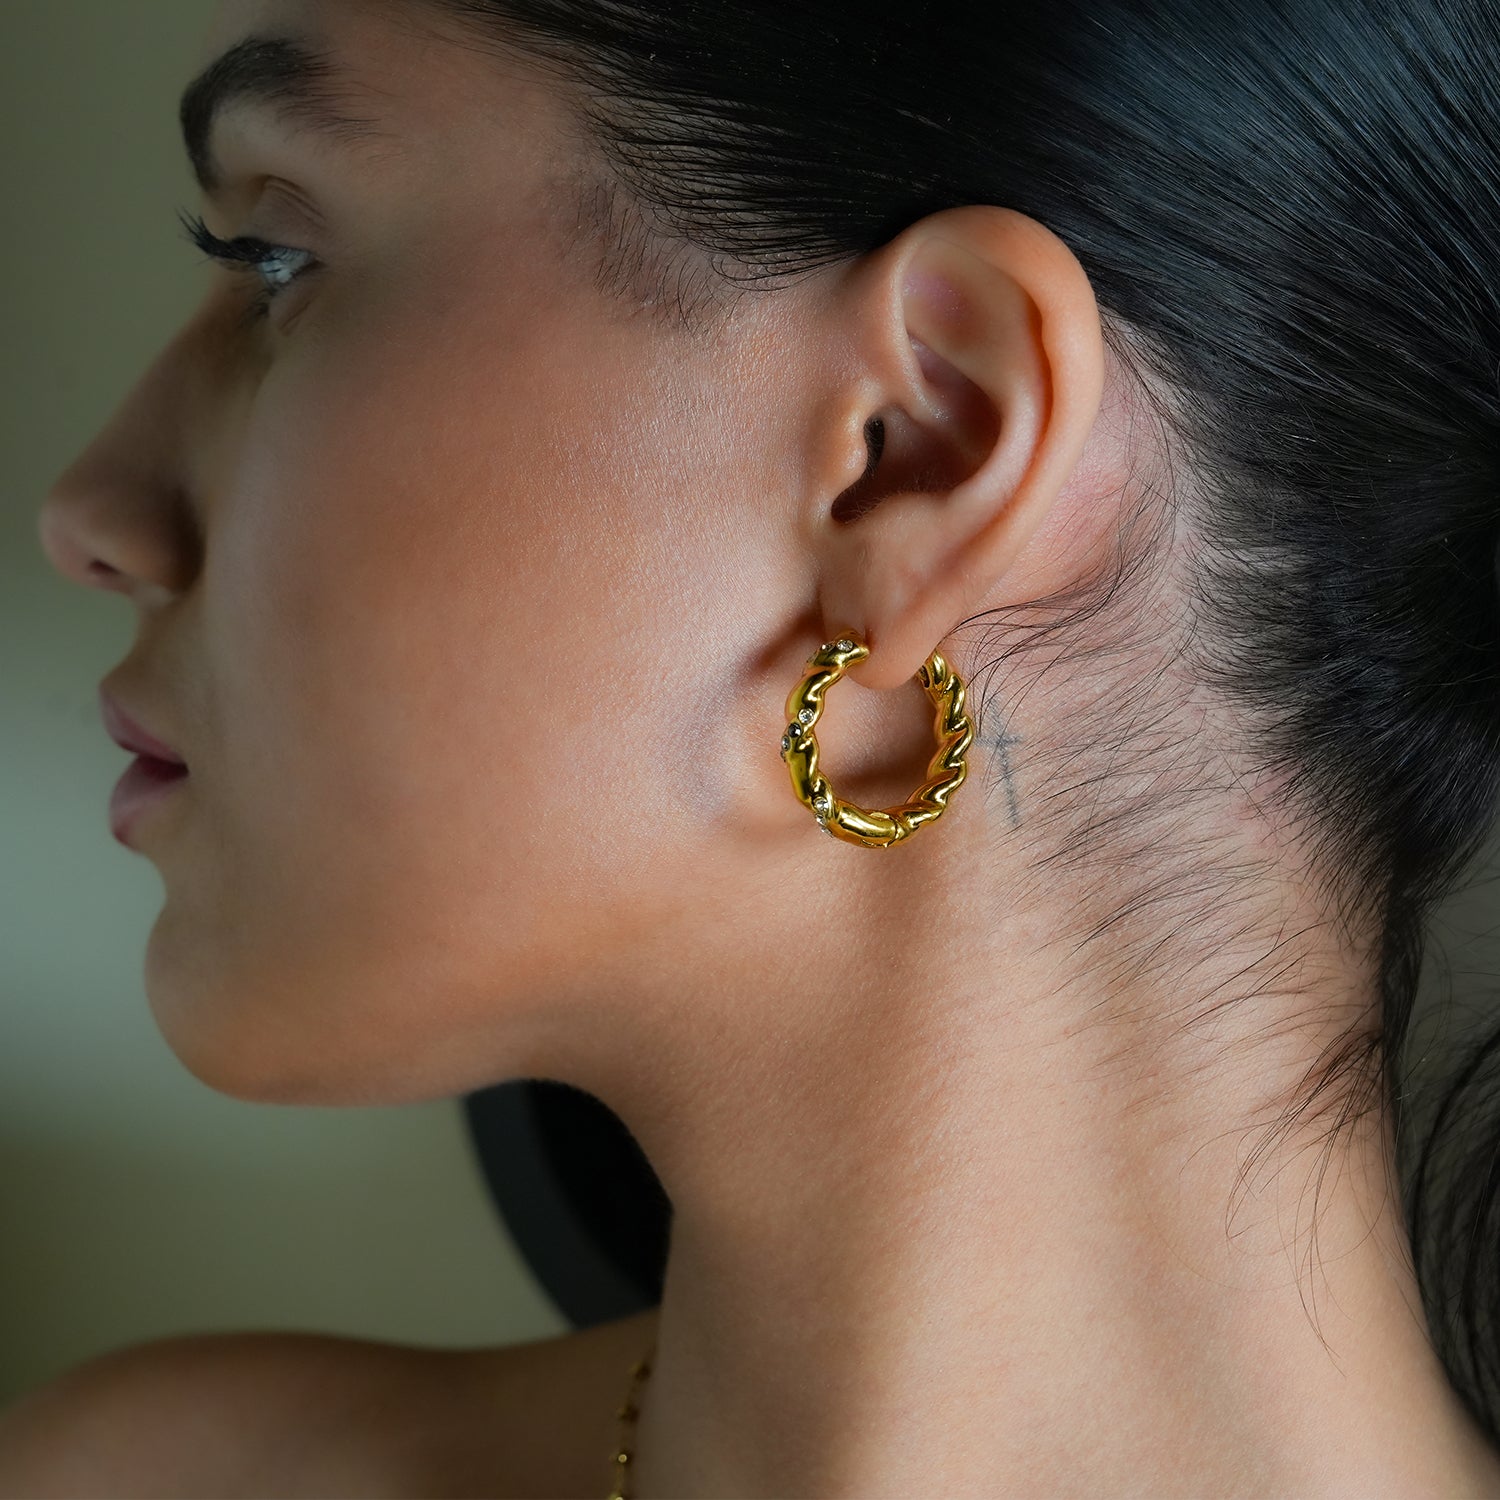 Style KAMENZ 50178: Twisted Textured Hoop Earrings with Zirconia Embellishments